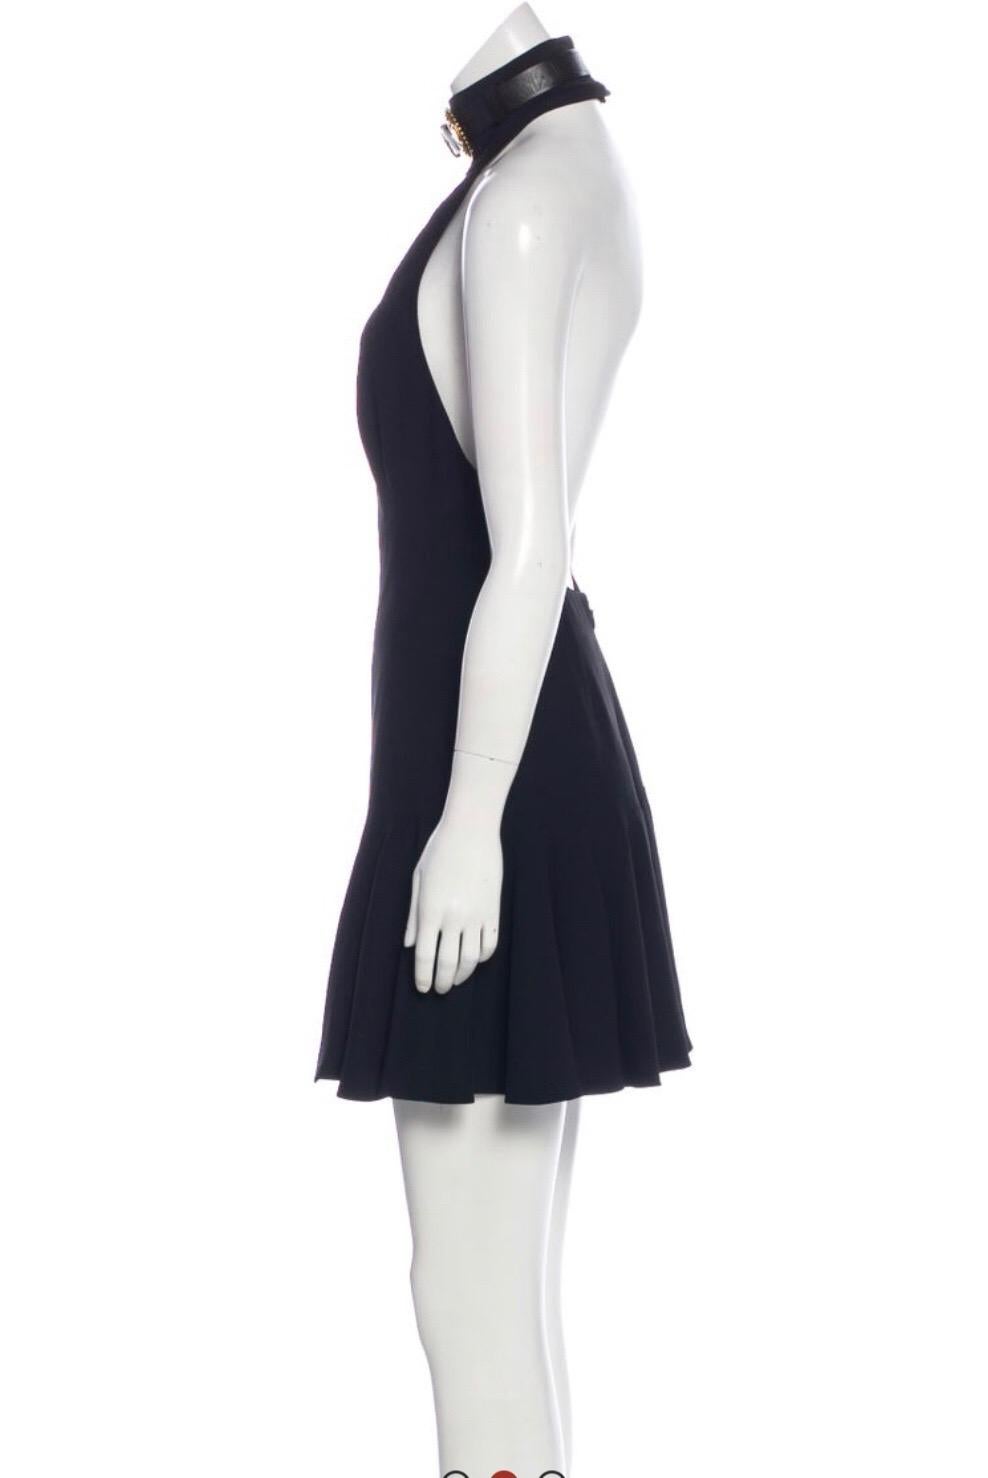 Alexander McQueen black halter mini dress with buckle detail. Condition : Excellent. 
Size S/ US 4/ IT 40
26